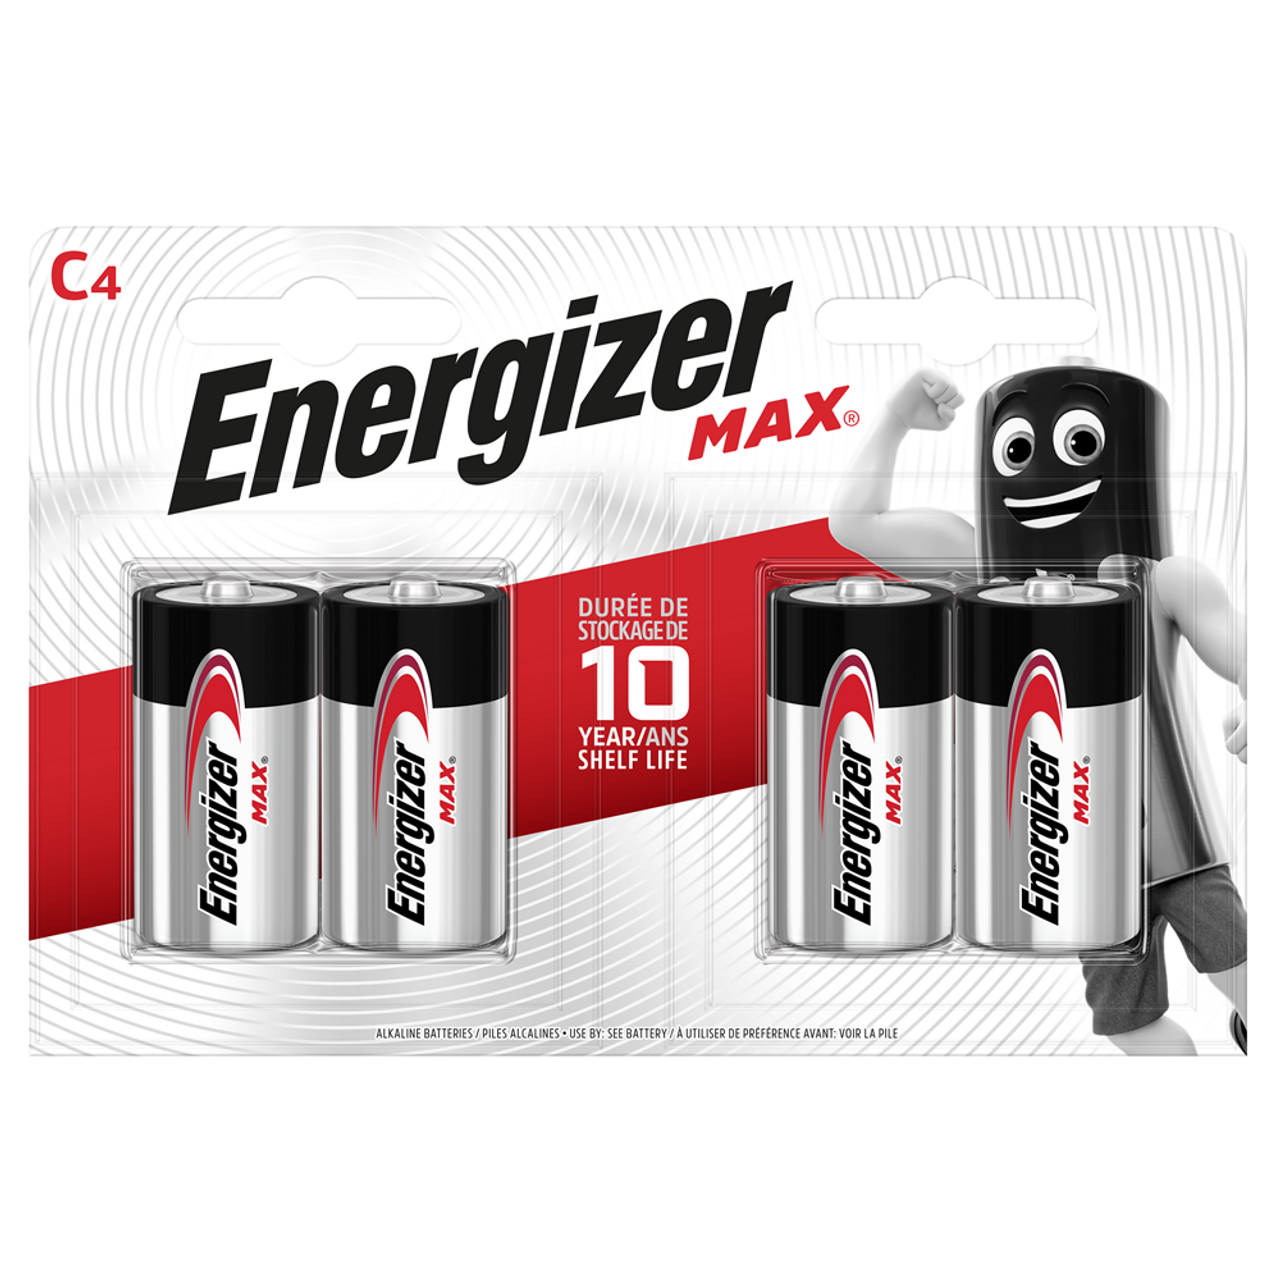 Energizer Max C LR14 Alkaline Batteries - 4 Pack - Refurbished Pristine